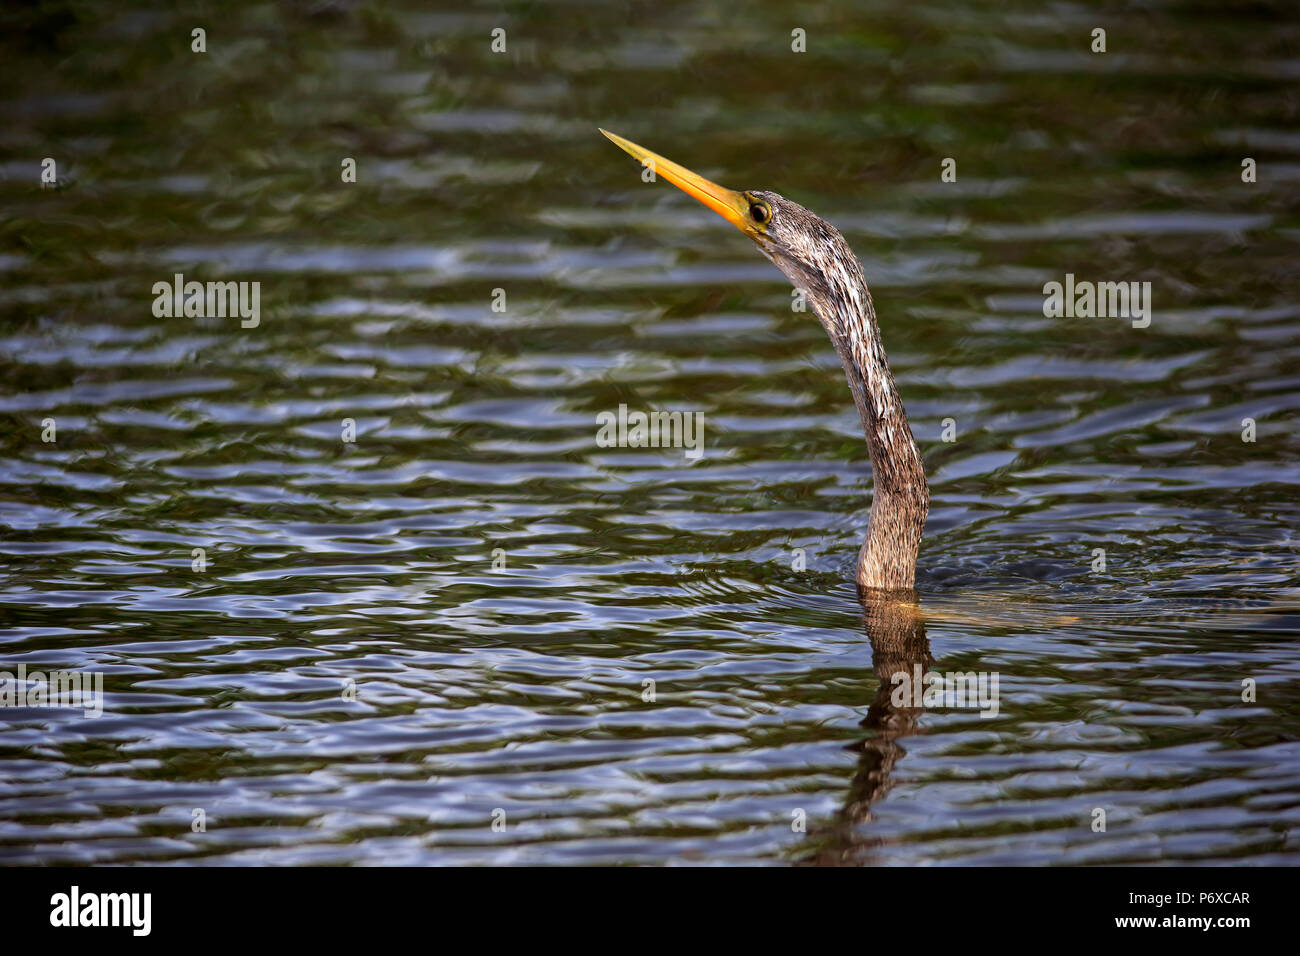 Anhinga, adulto in acqua alla ricerca di cibo, Wakodahatchee zone umide, Delray Beach, Florida, Stati Uniti d'America, anhinga anhinga Foto Stock